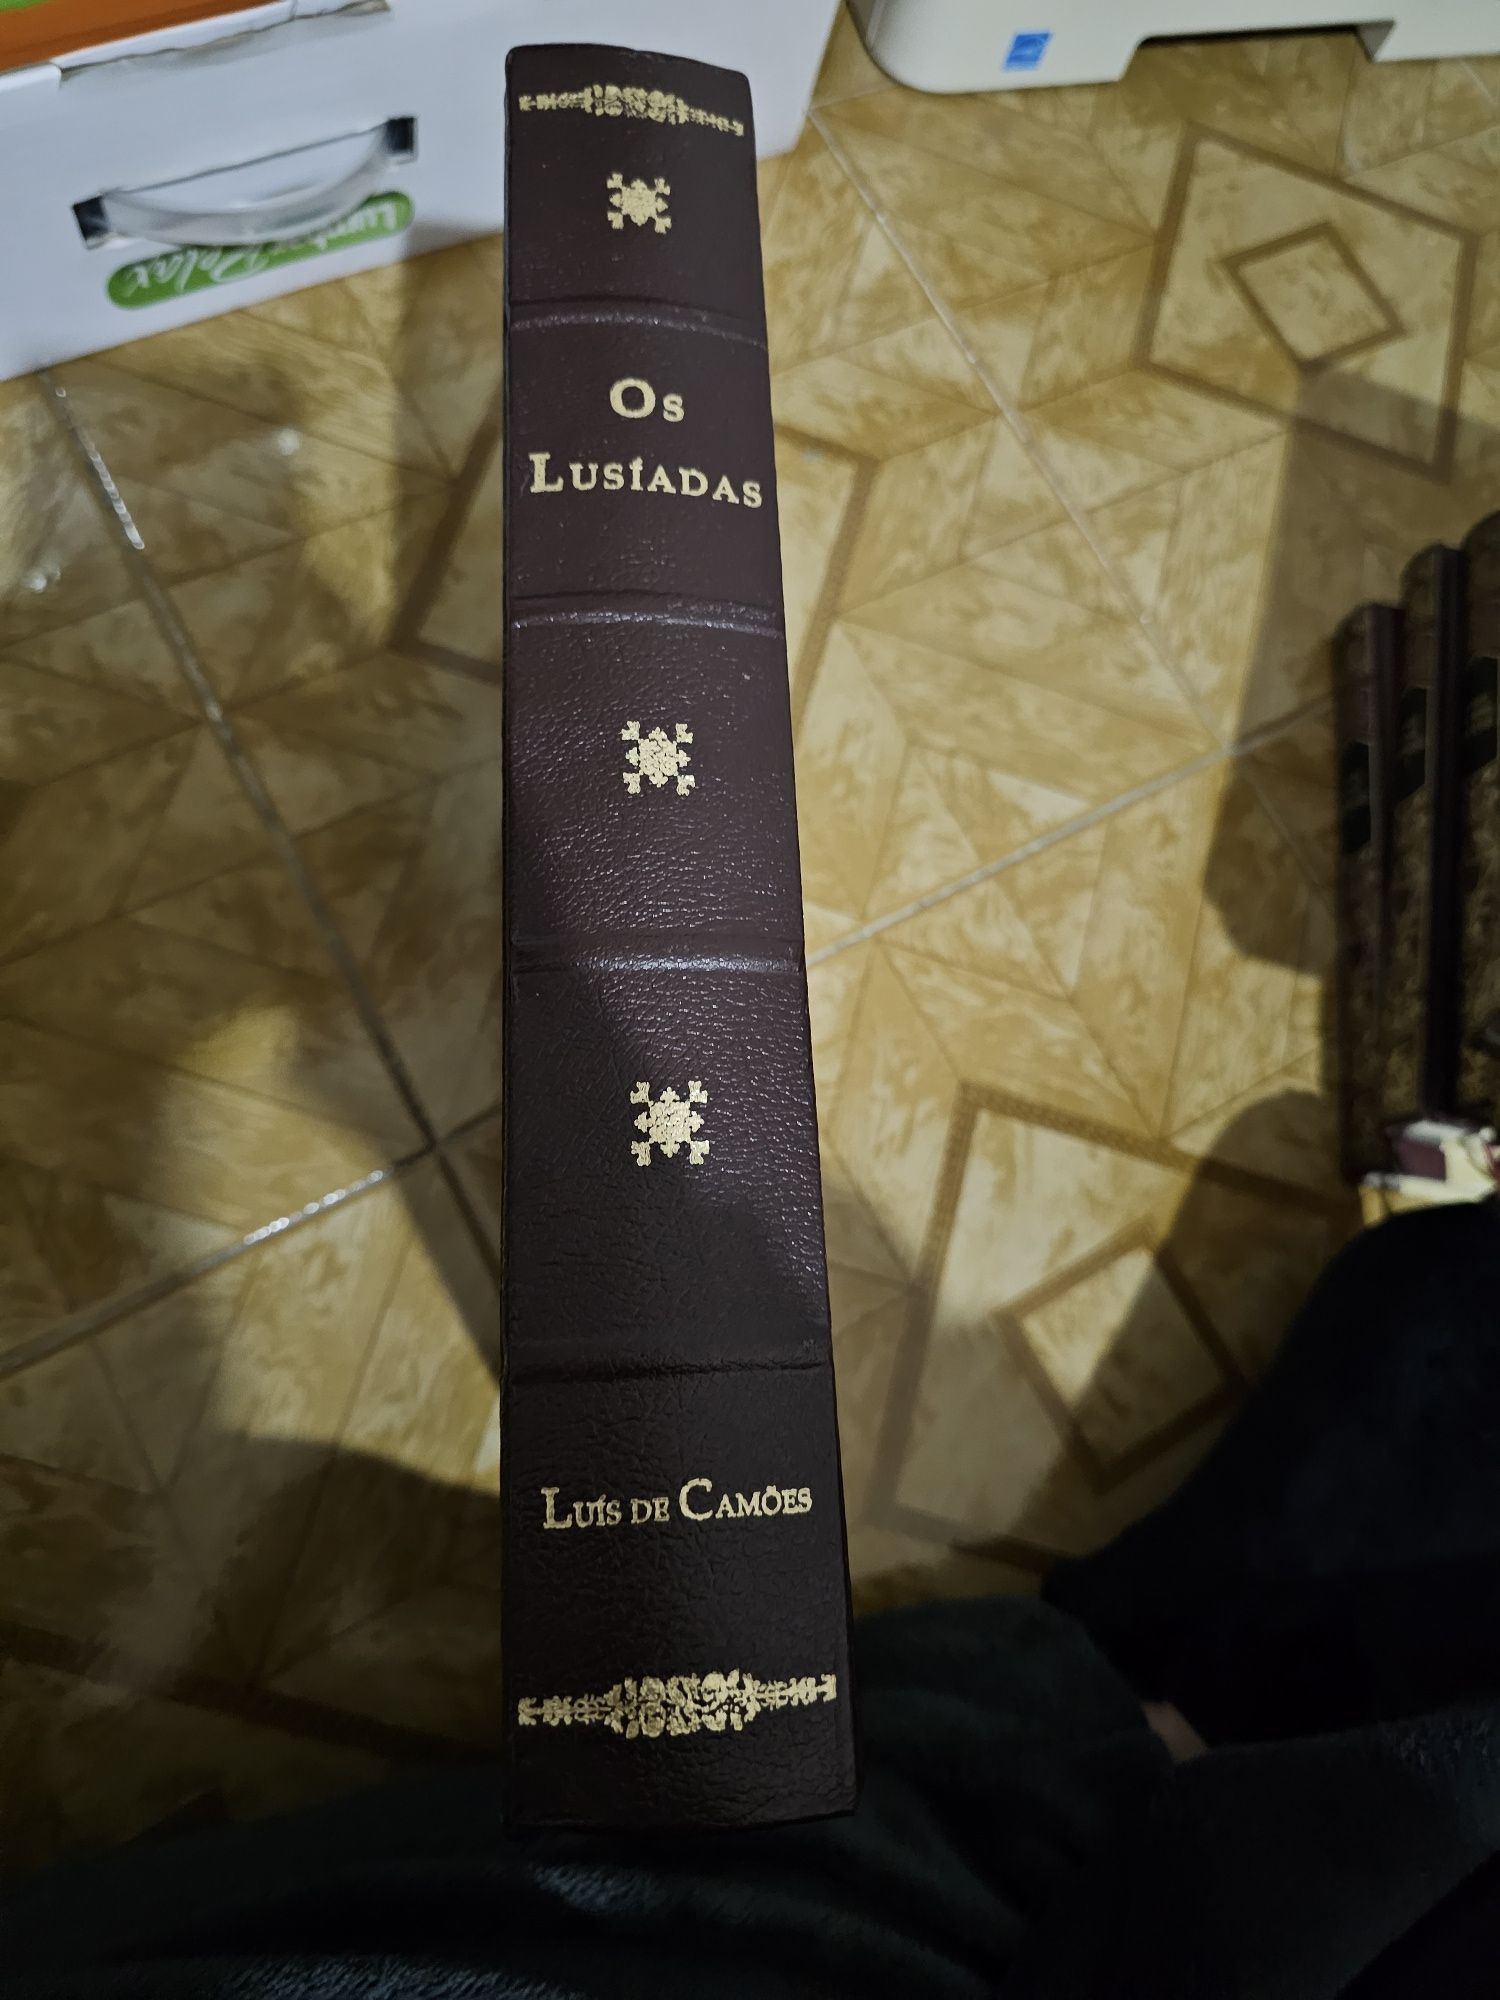 Os Lusíadas - Luis de Camões - Exemplar 3474 de 4973 - Exemplar Único